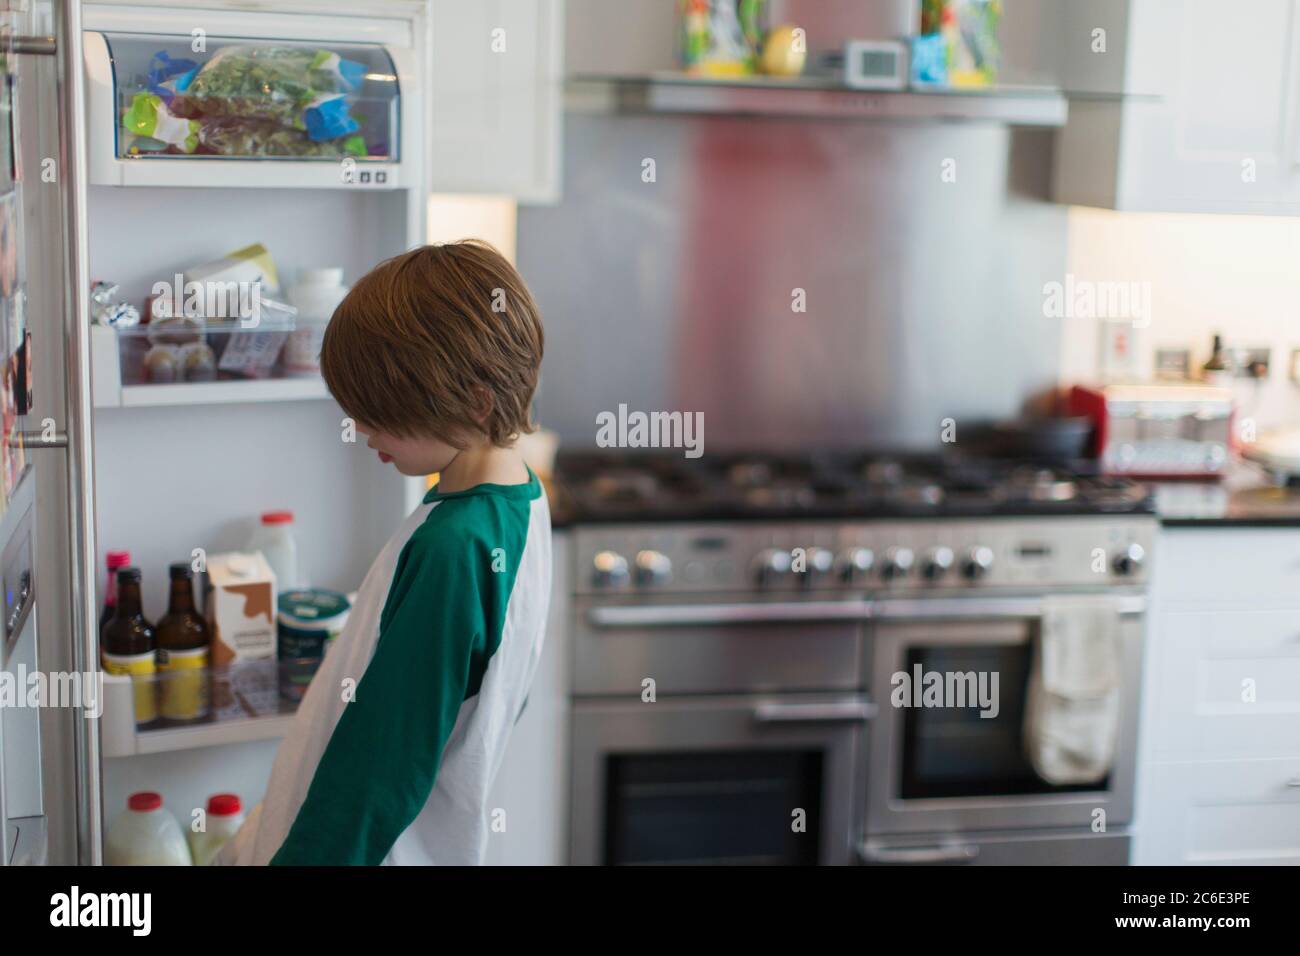 Boy looking inside kitchen refrigerator Stock Photo